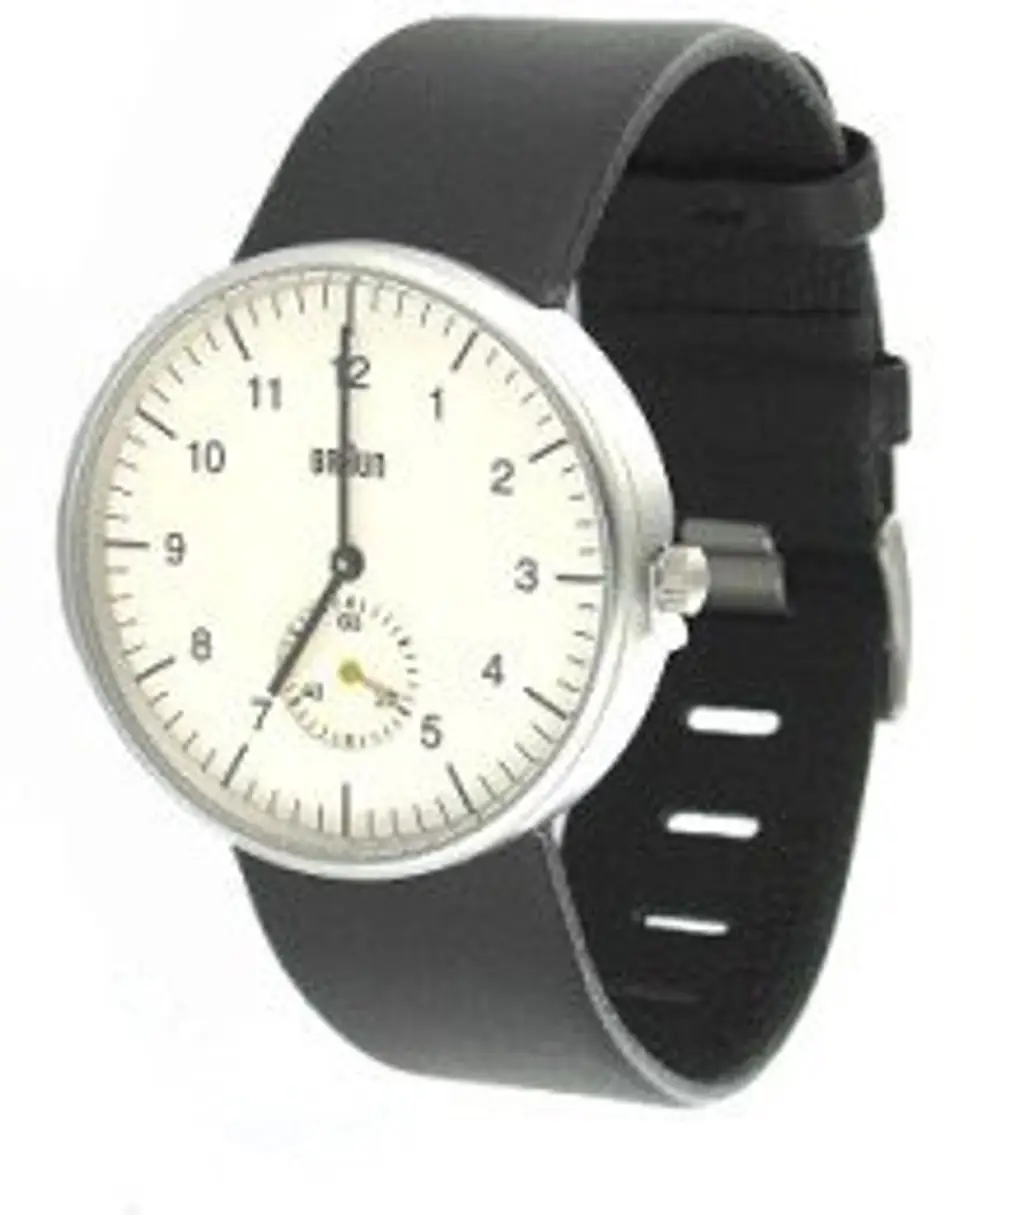 Braun Men's Analog Wrist Watch